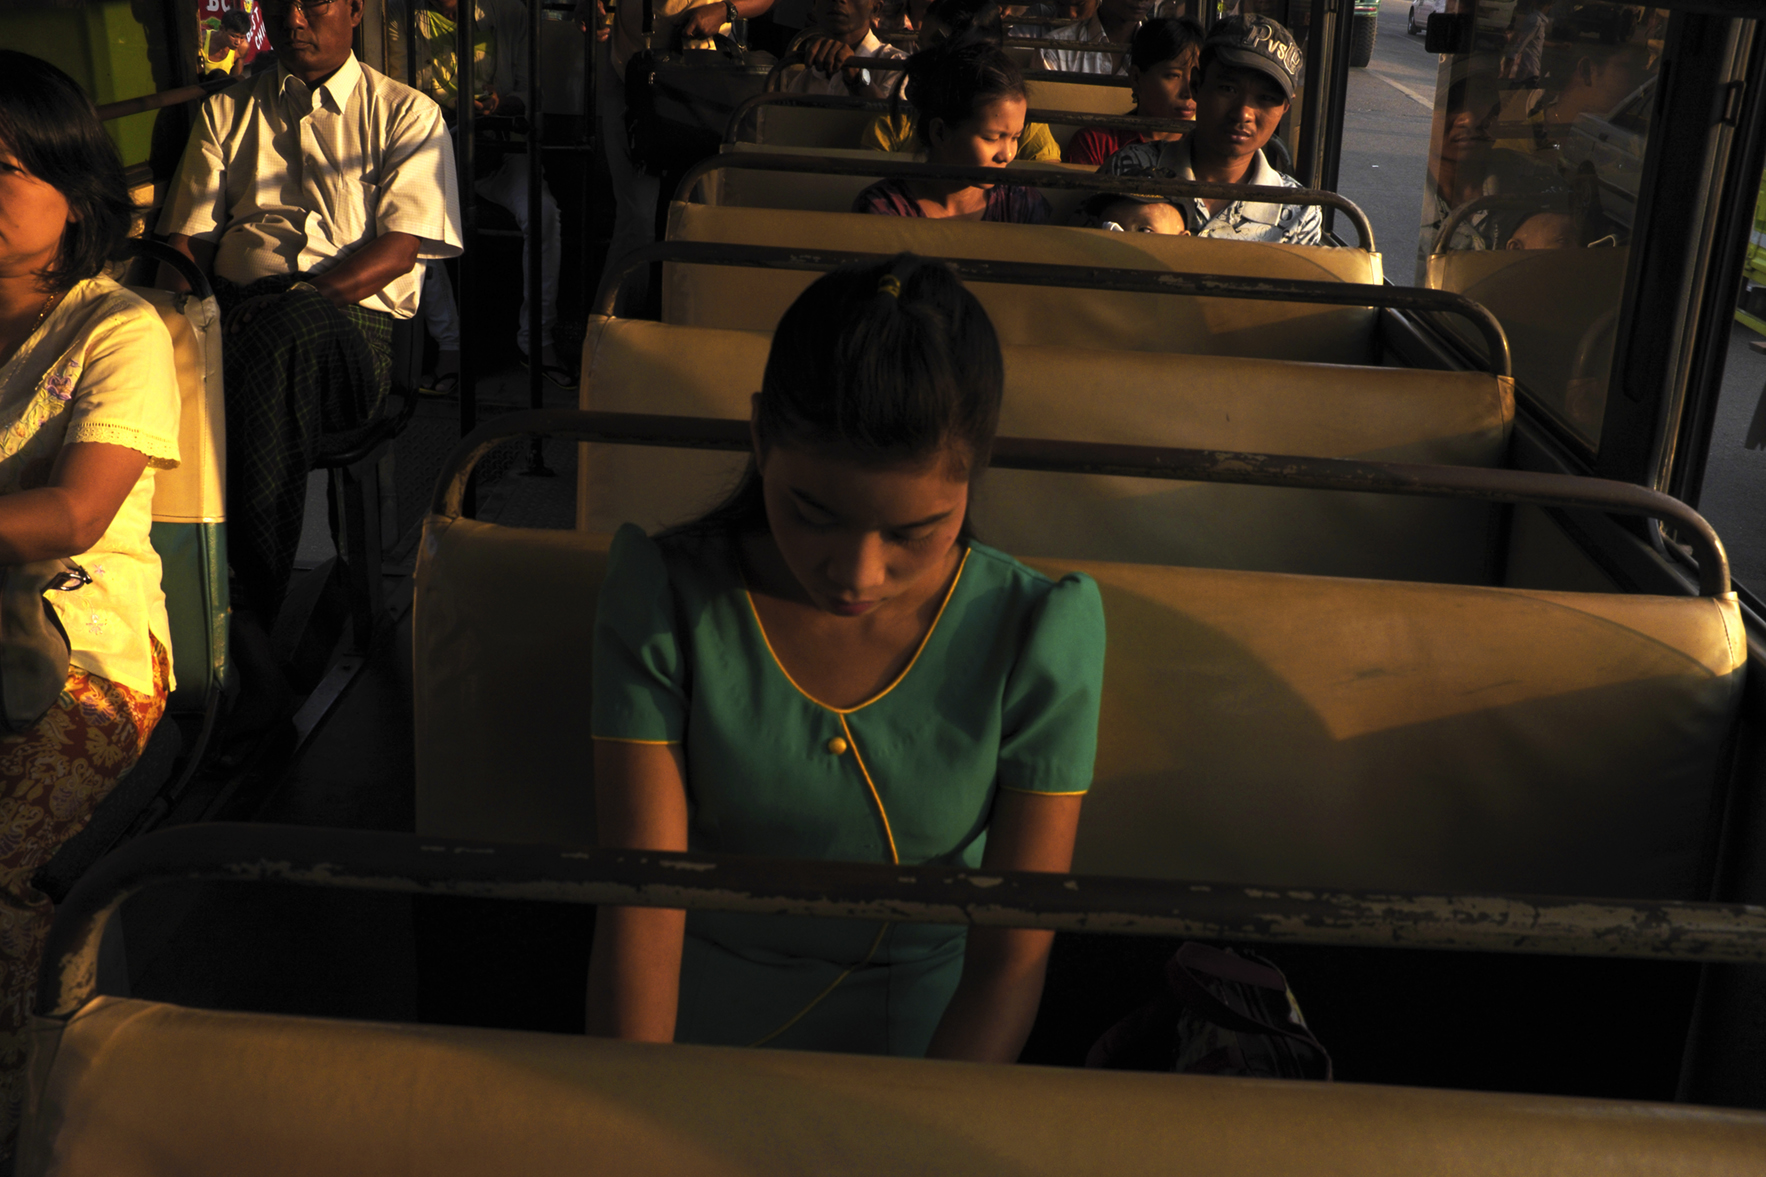  Bus Commuter. Rangoon, Burma. 2013 